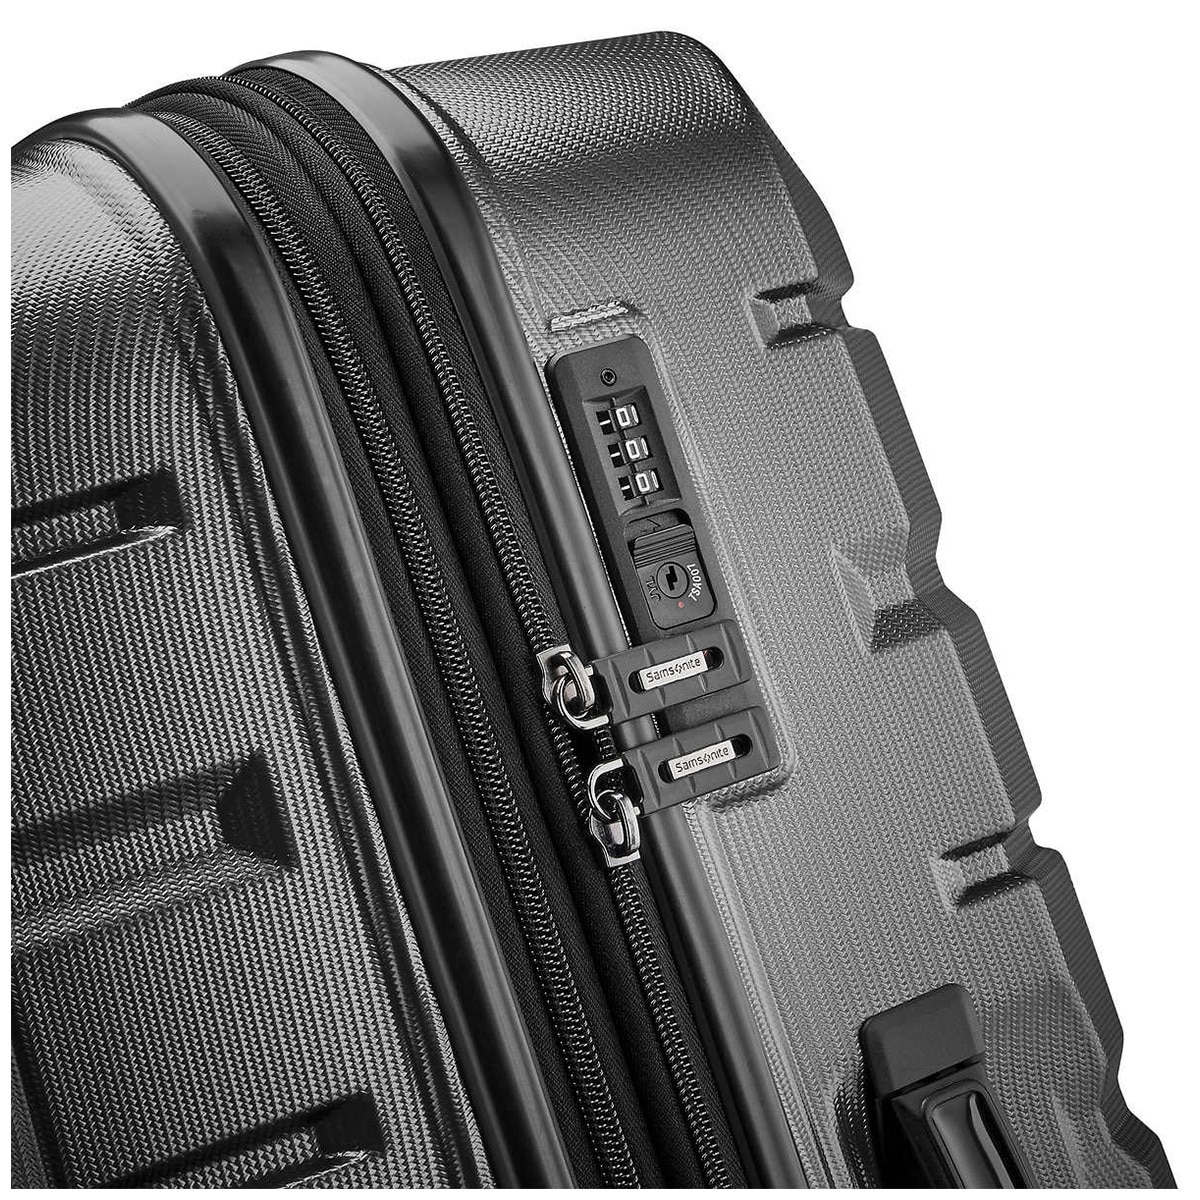 Samsonite Tech 2 Hardside Luggage - Grey